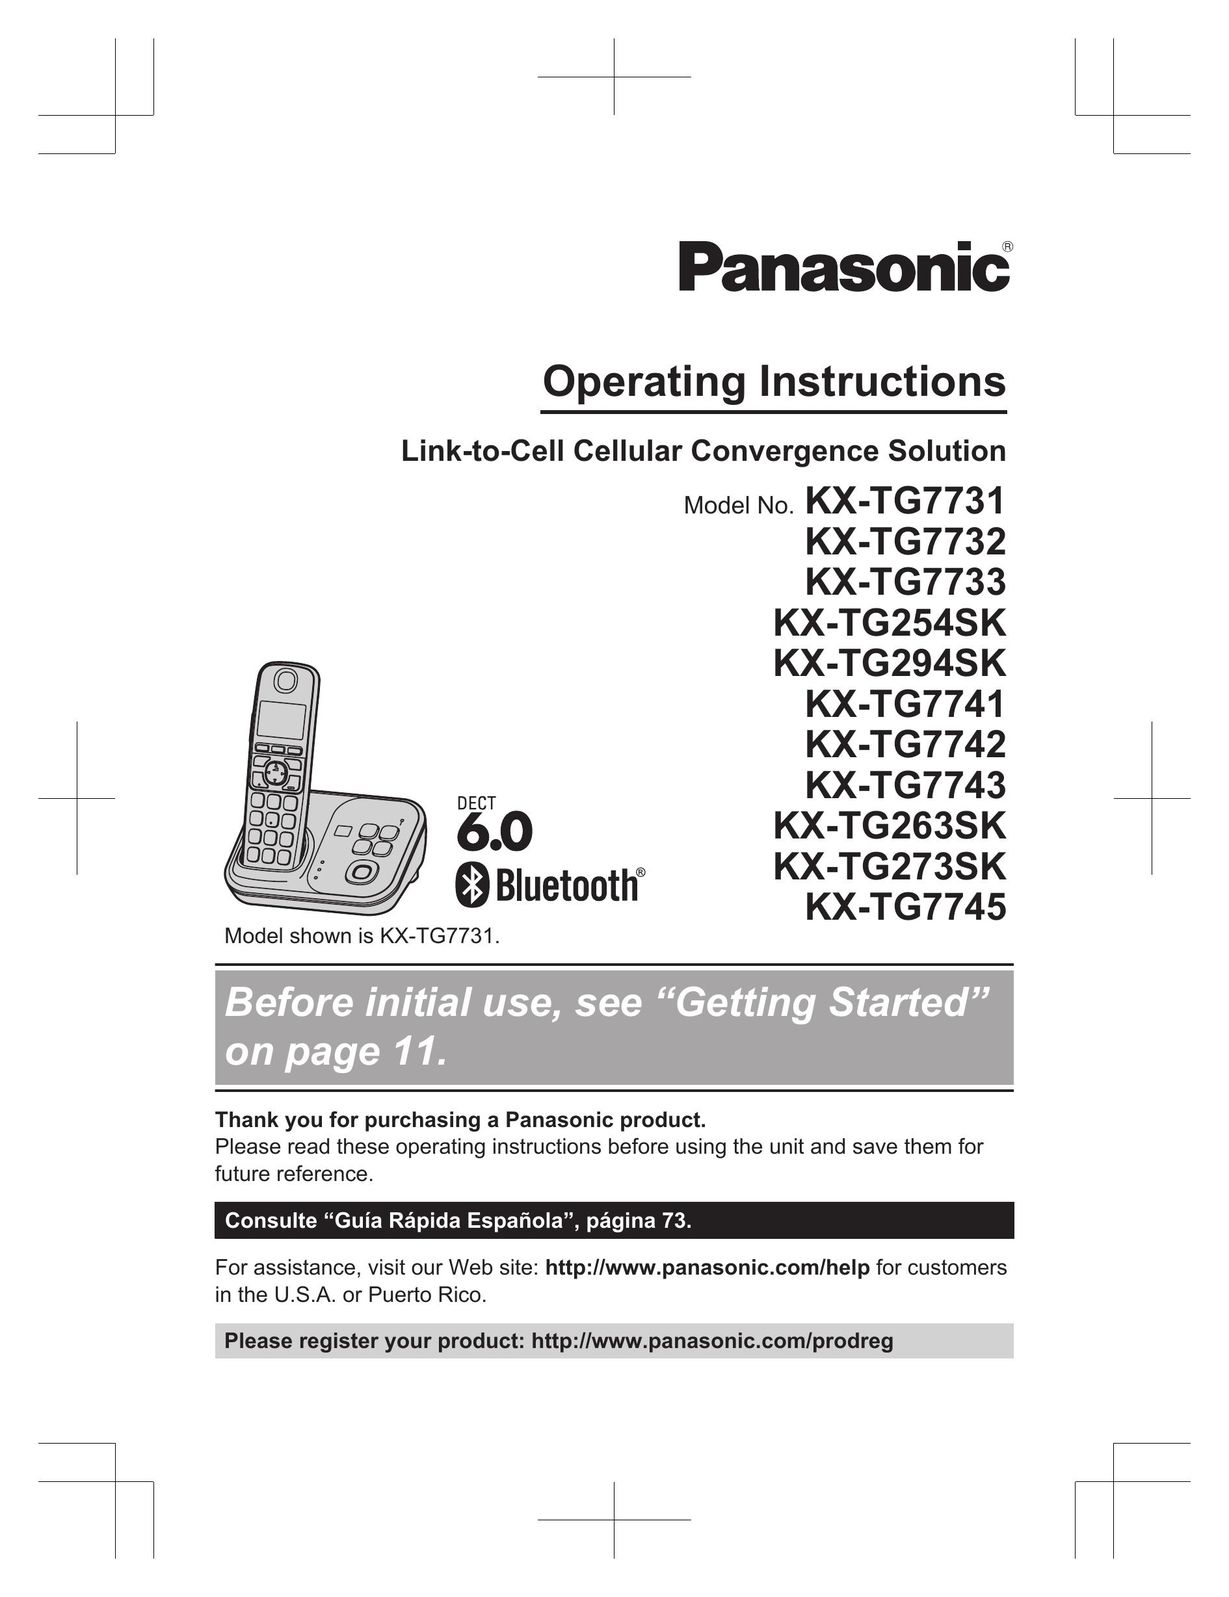 Panasonic KX-TG7743 Carrying Case User Manual